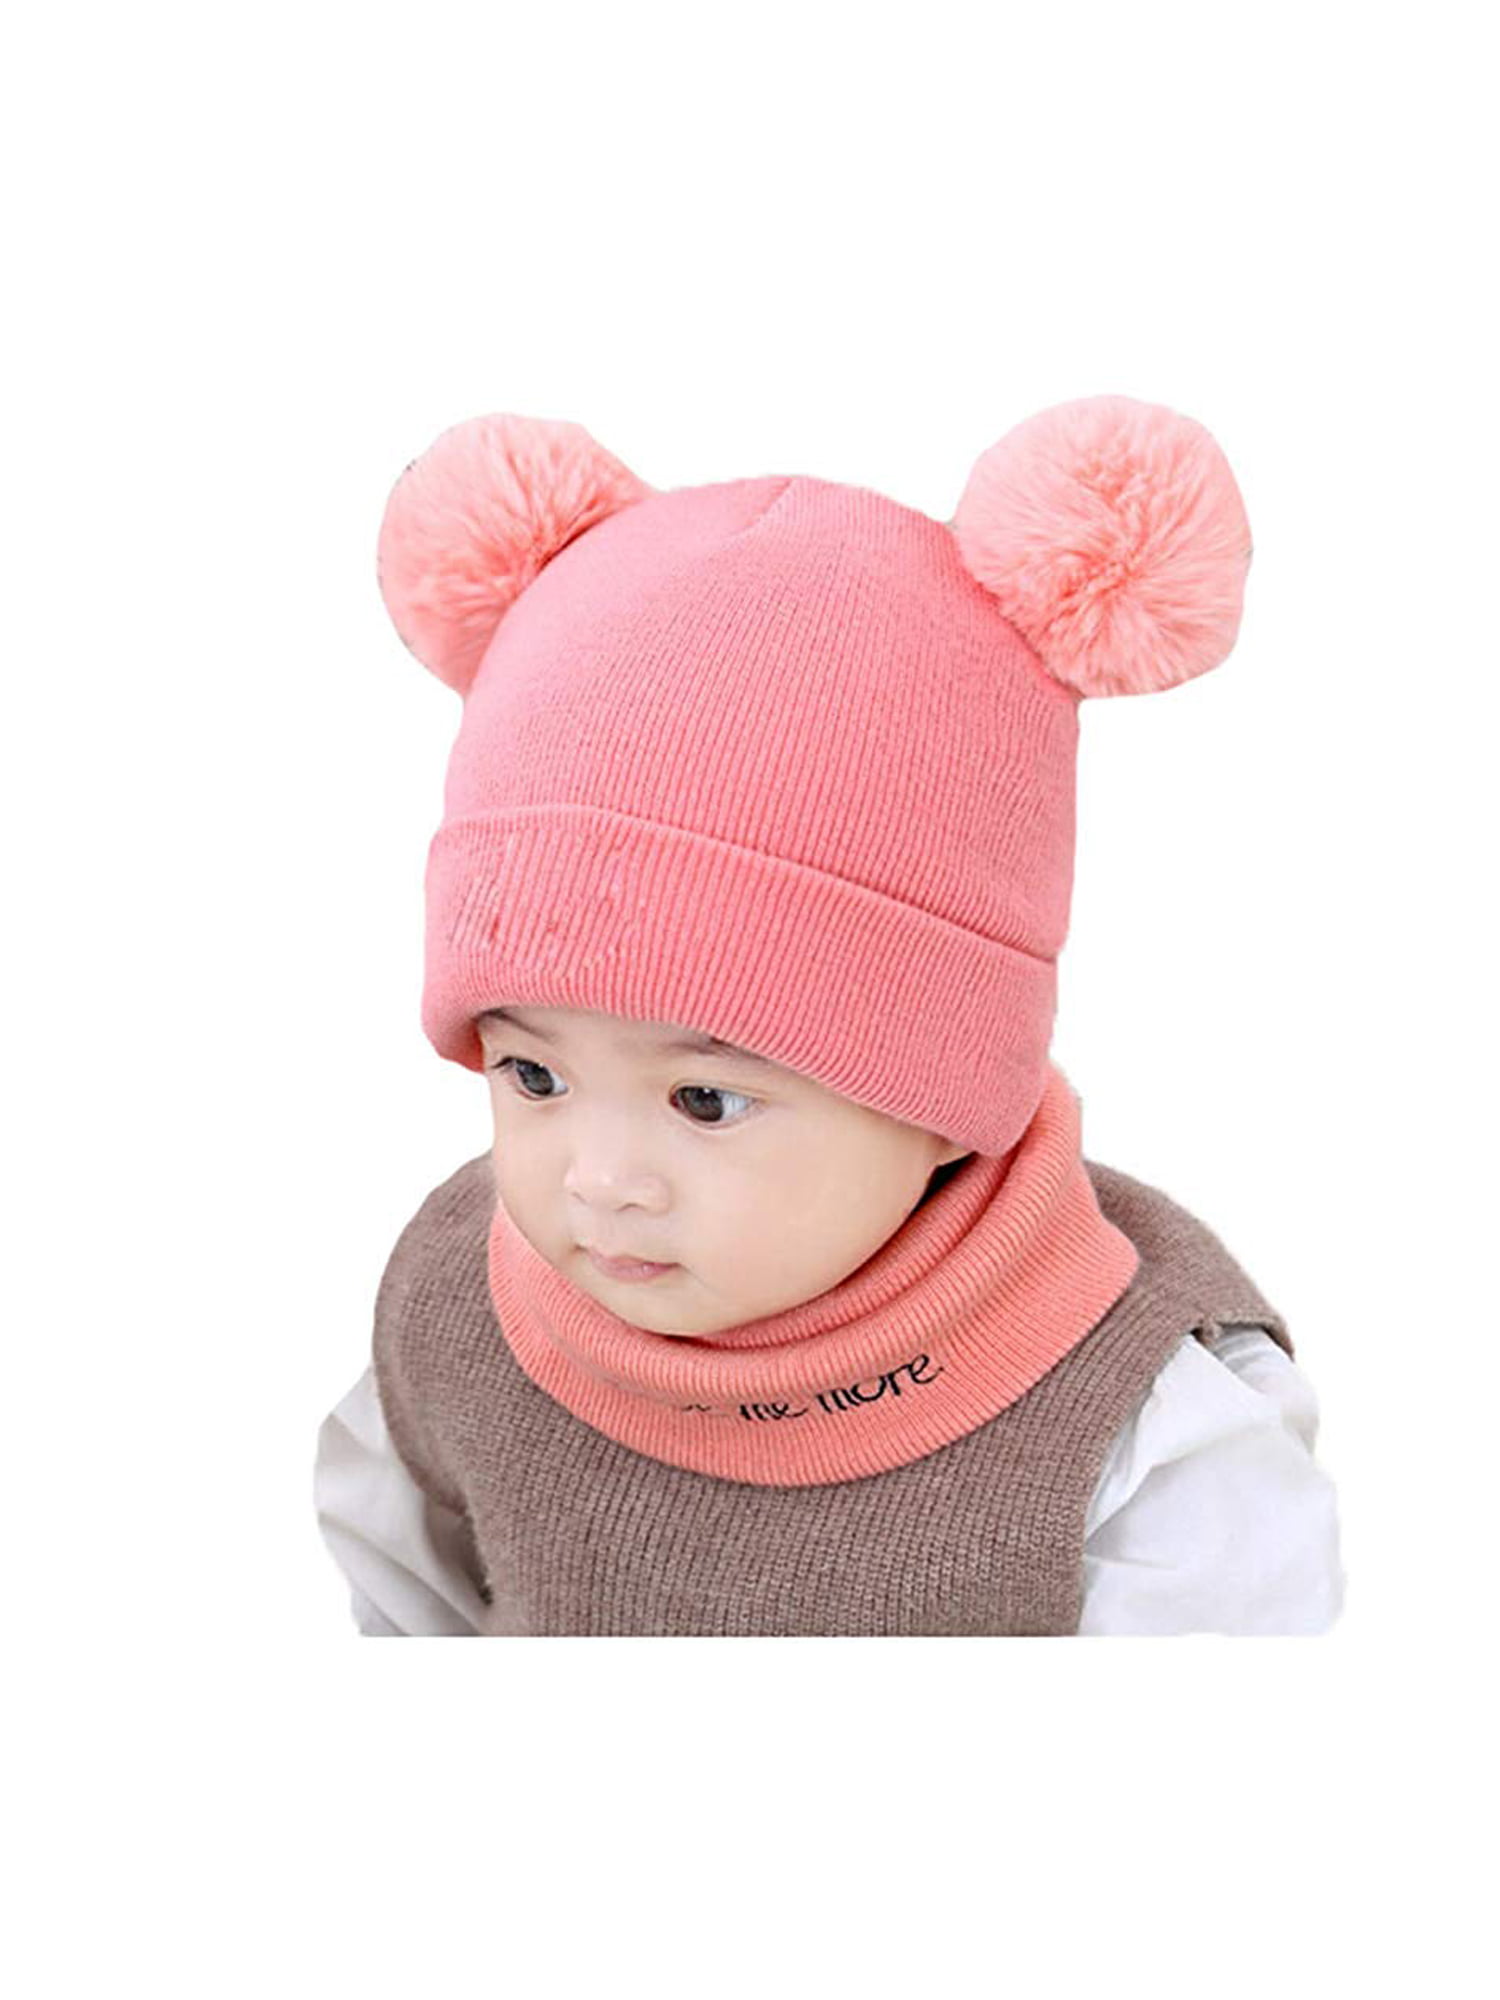 Luzlen Winter Hat Scarf Set Girls Fleece Lined Knit Beanie Toddler Kids Hat with Earflap 